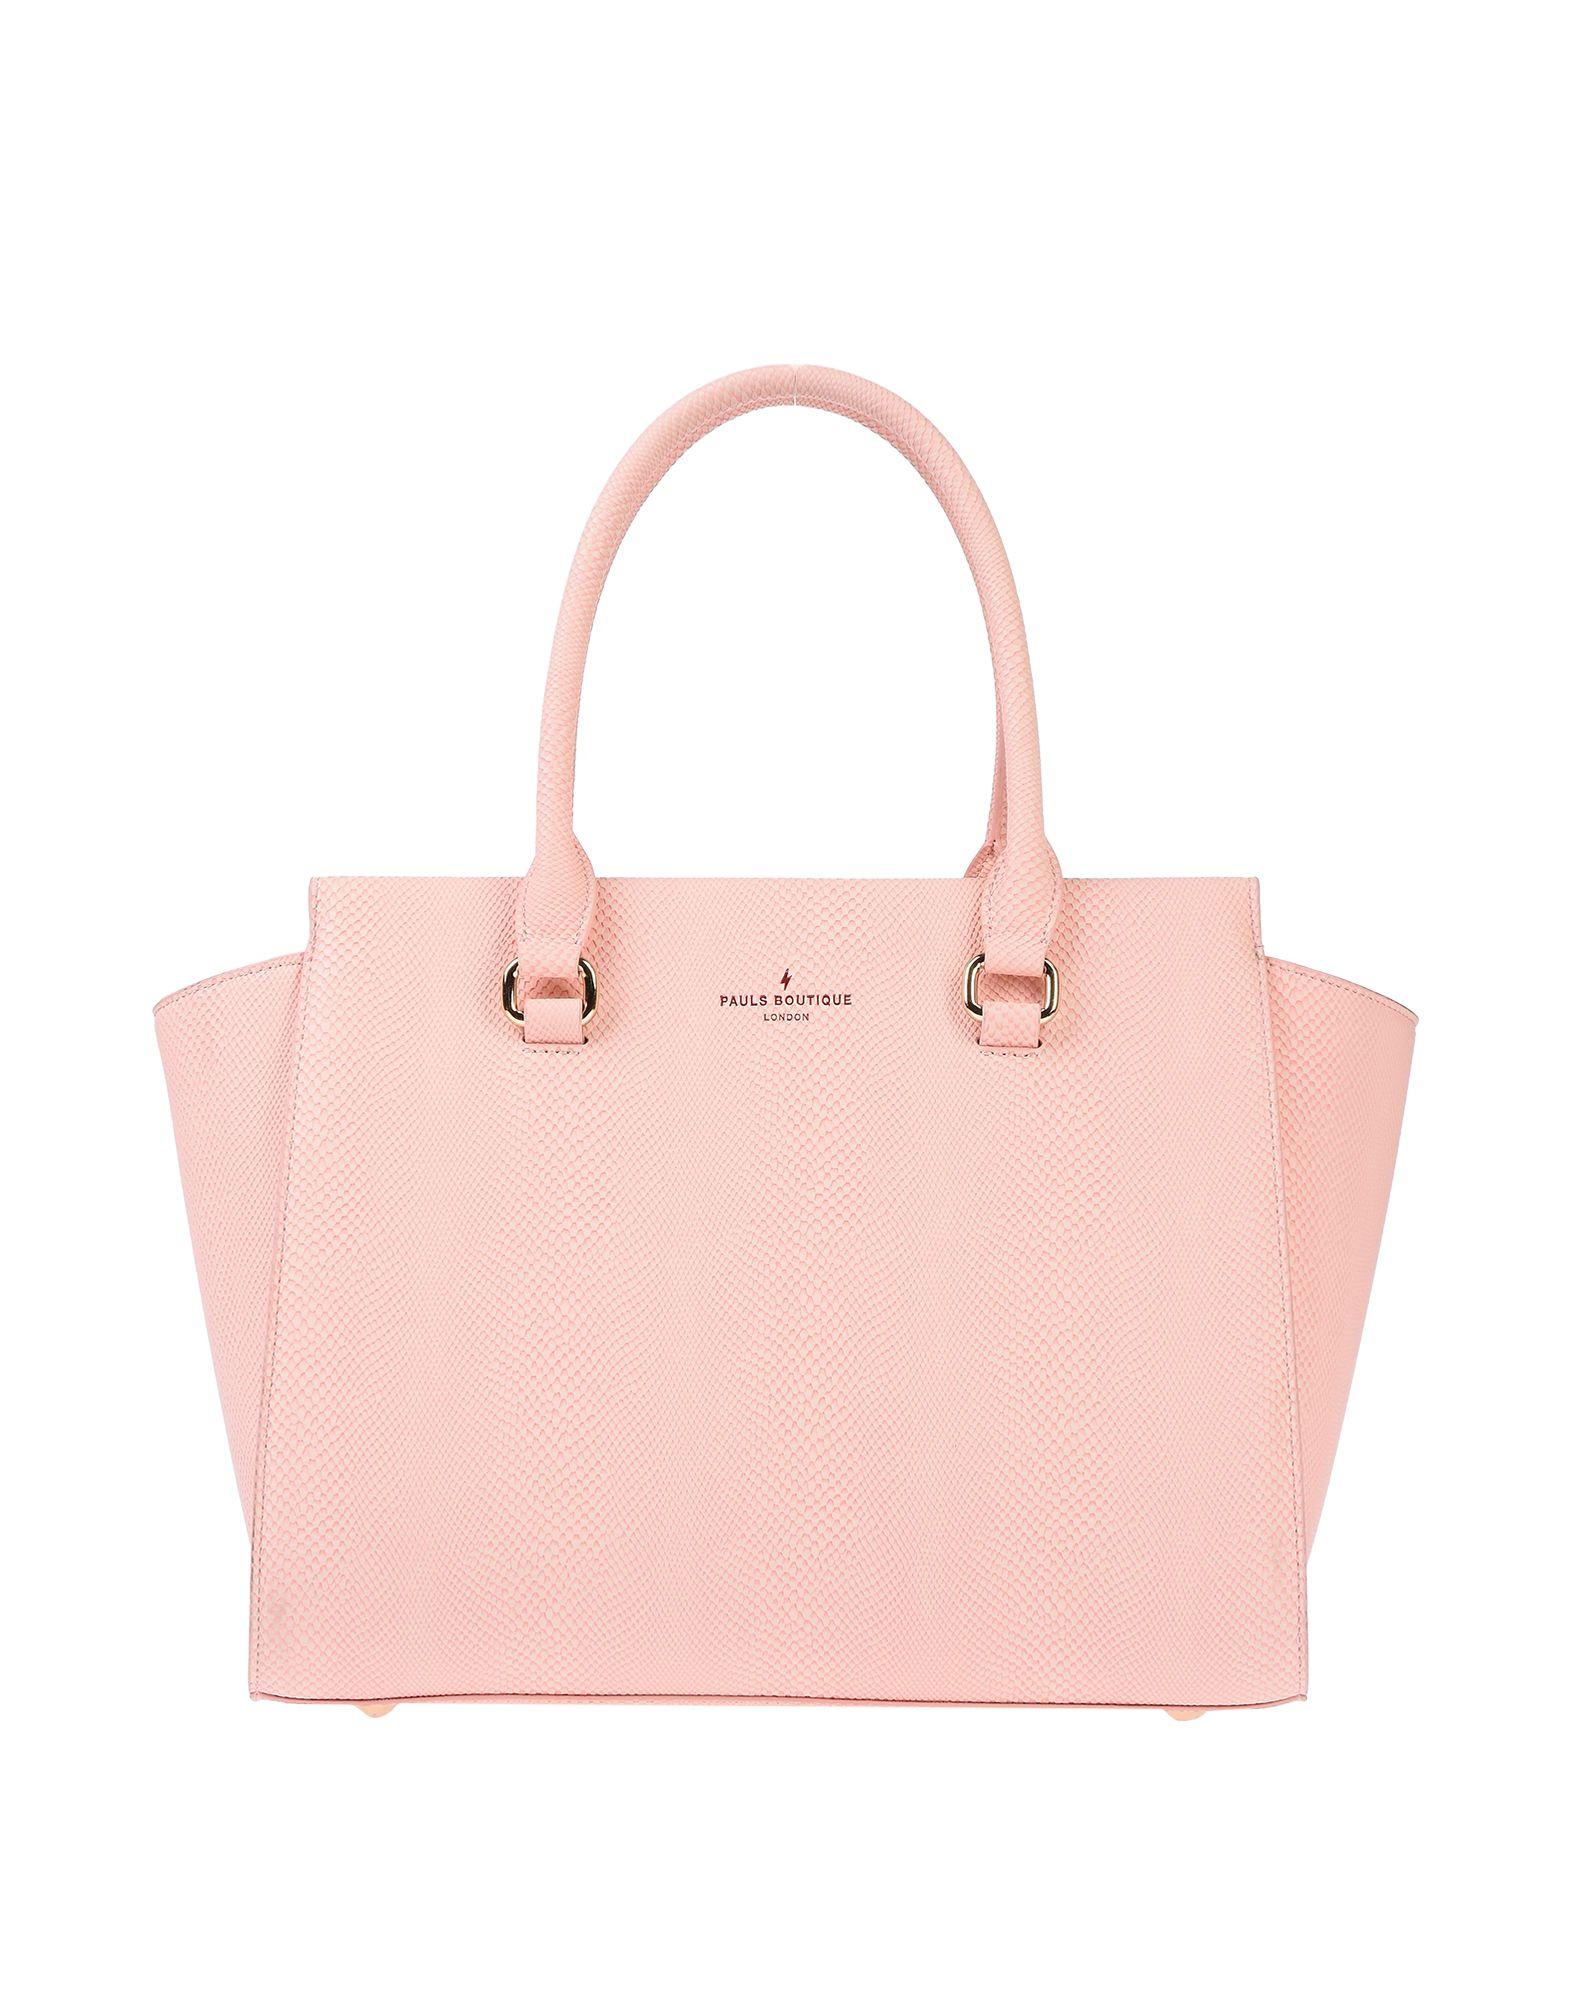 PAULS BOUTIQUE London Handbag in Pink | Lyst Australia